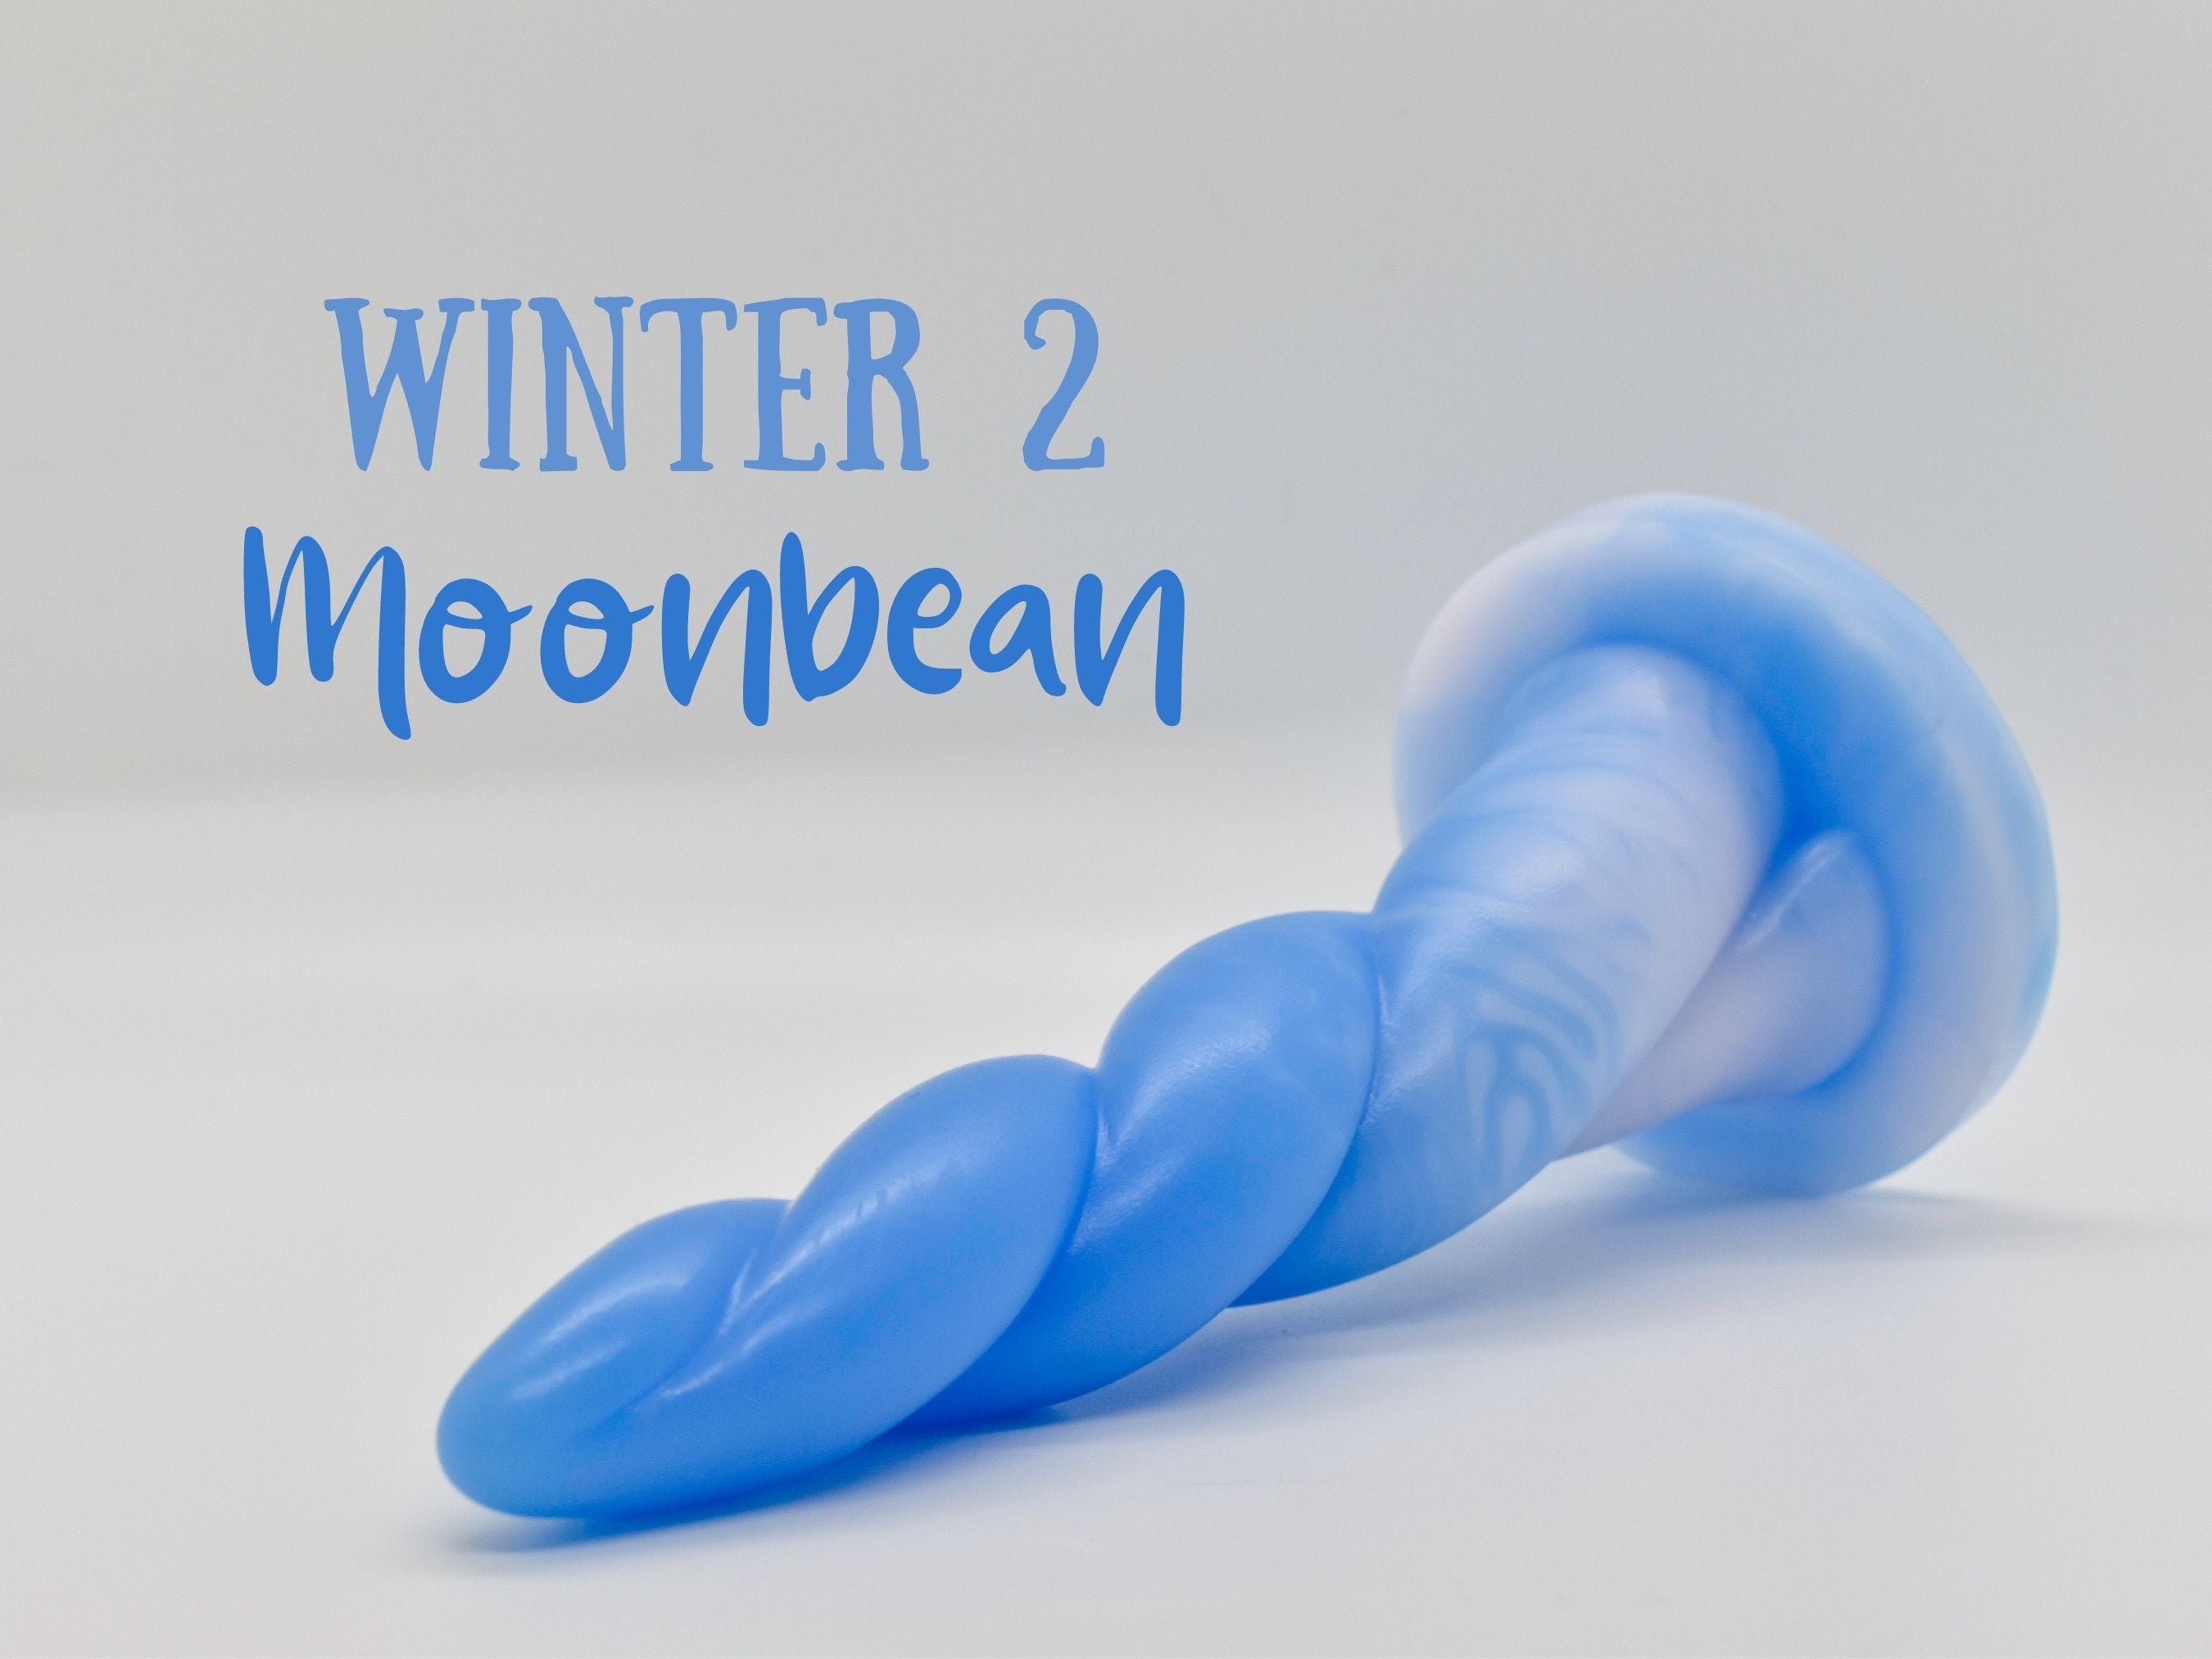 Winter 2 Moonbean